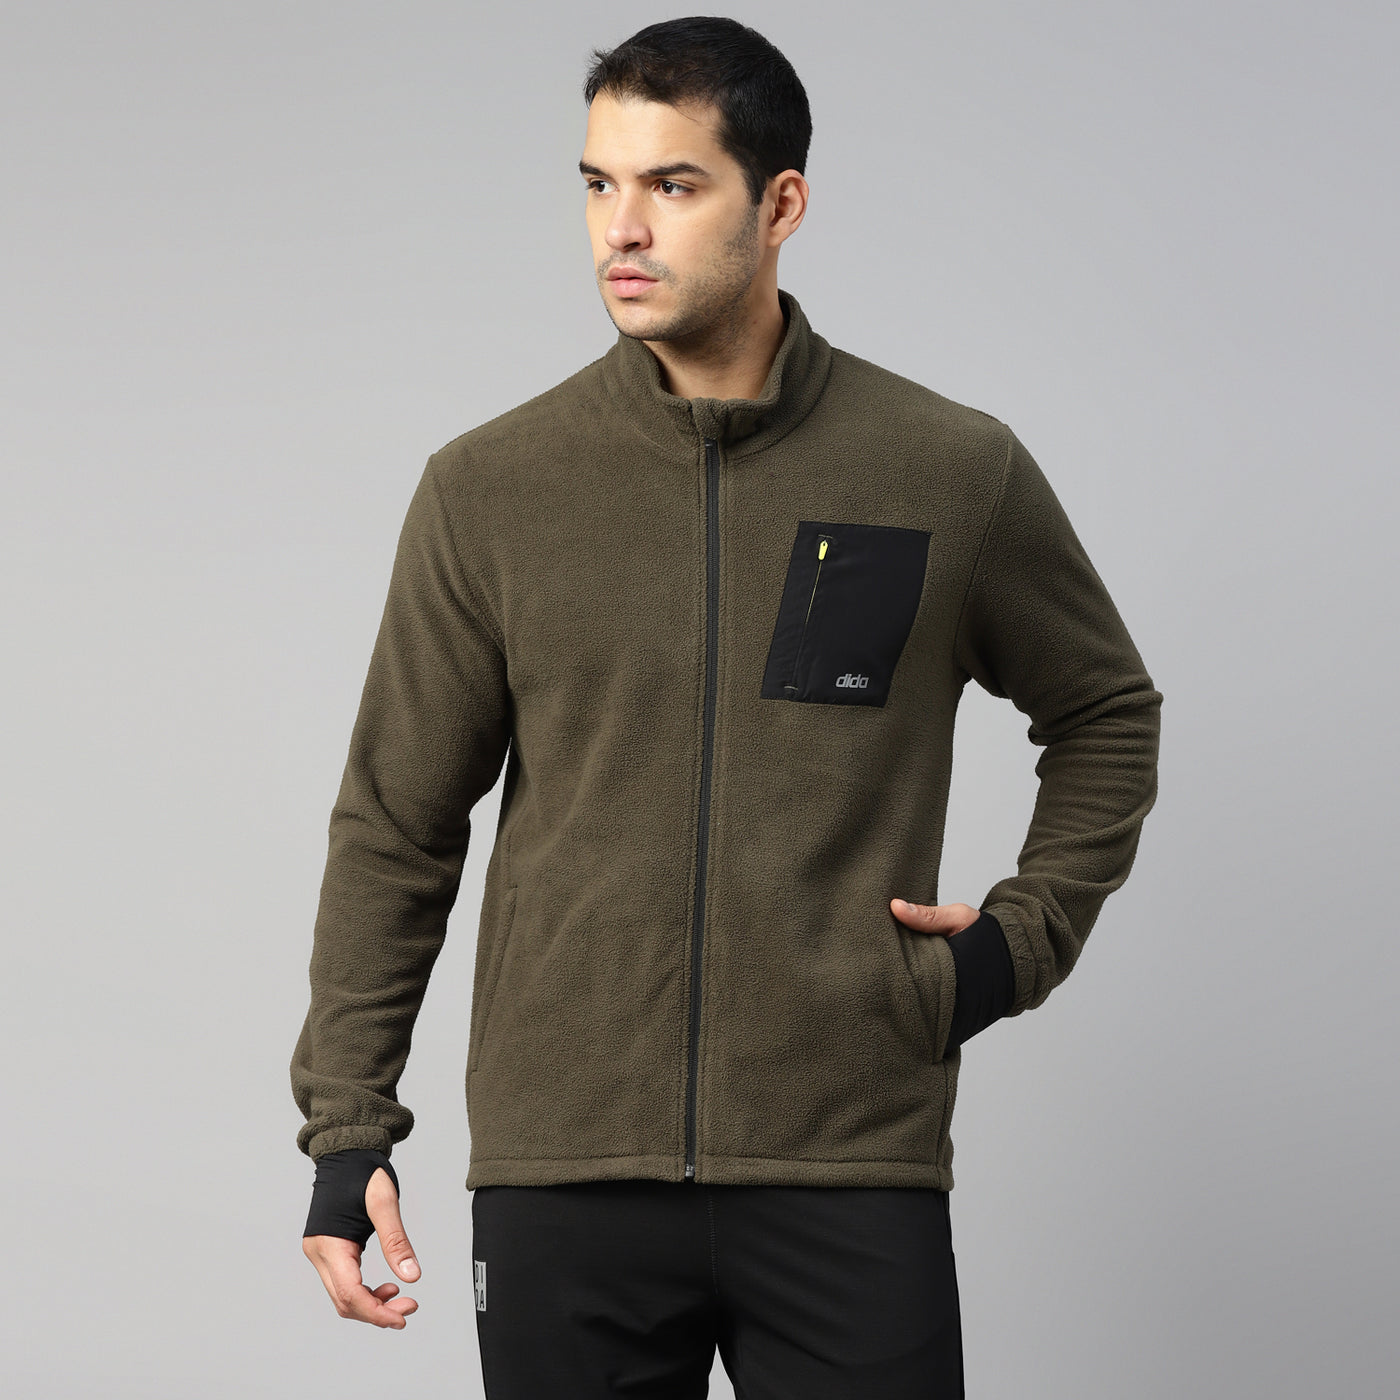 Pocket Detail Fleece Jacket - Men